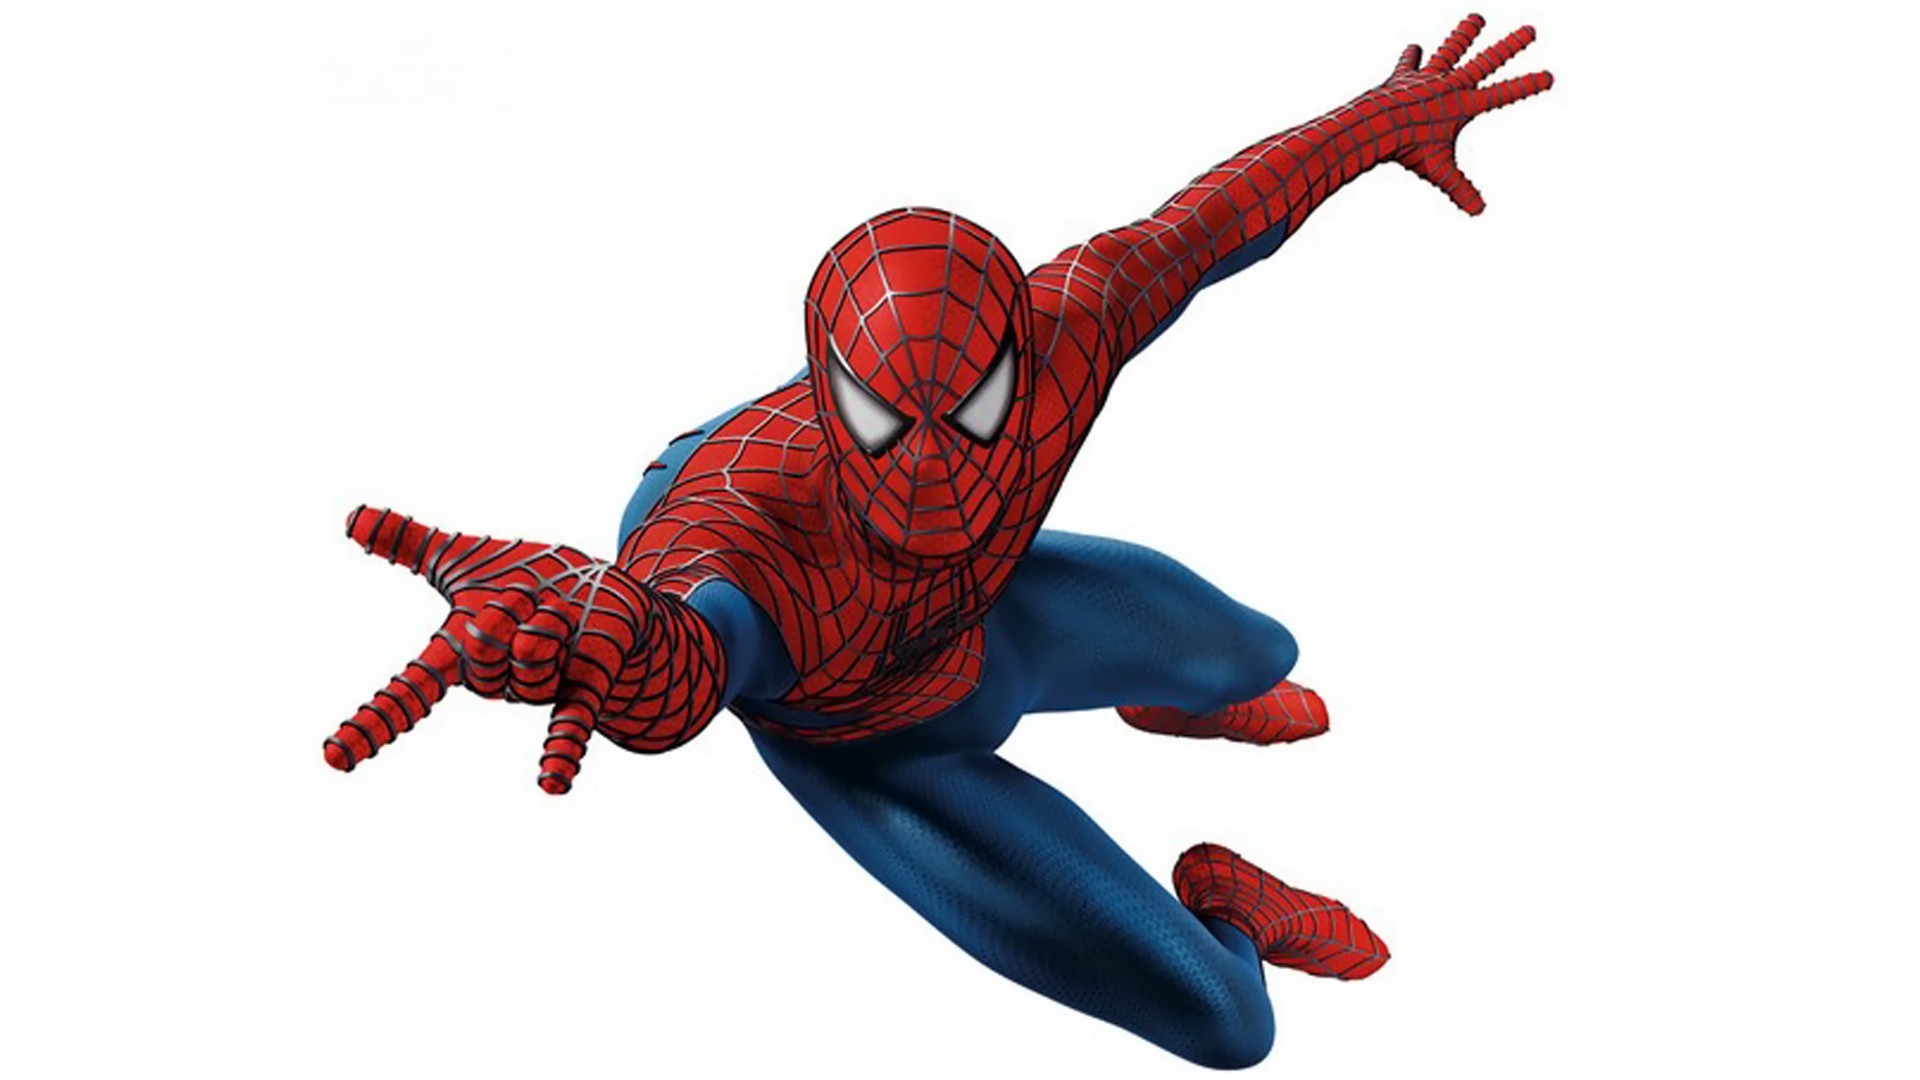 spiderman cartoon wallpaper,spider man,superhero,fictional character,gesture,supervillain